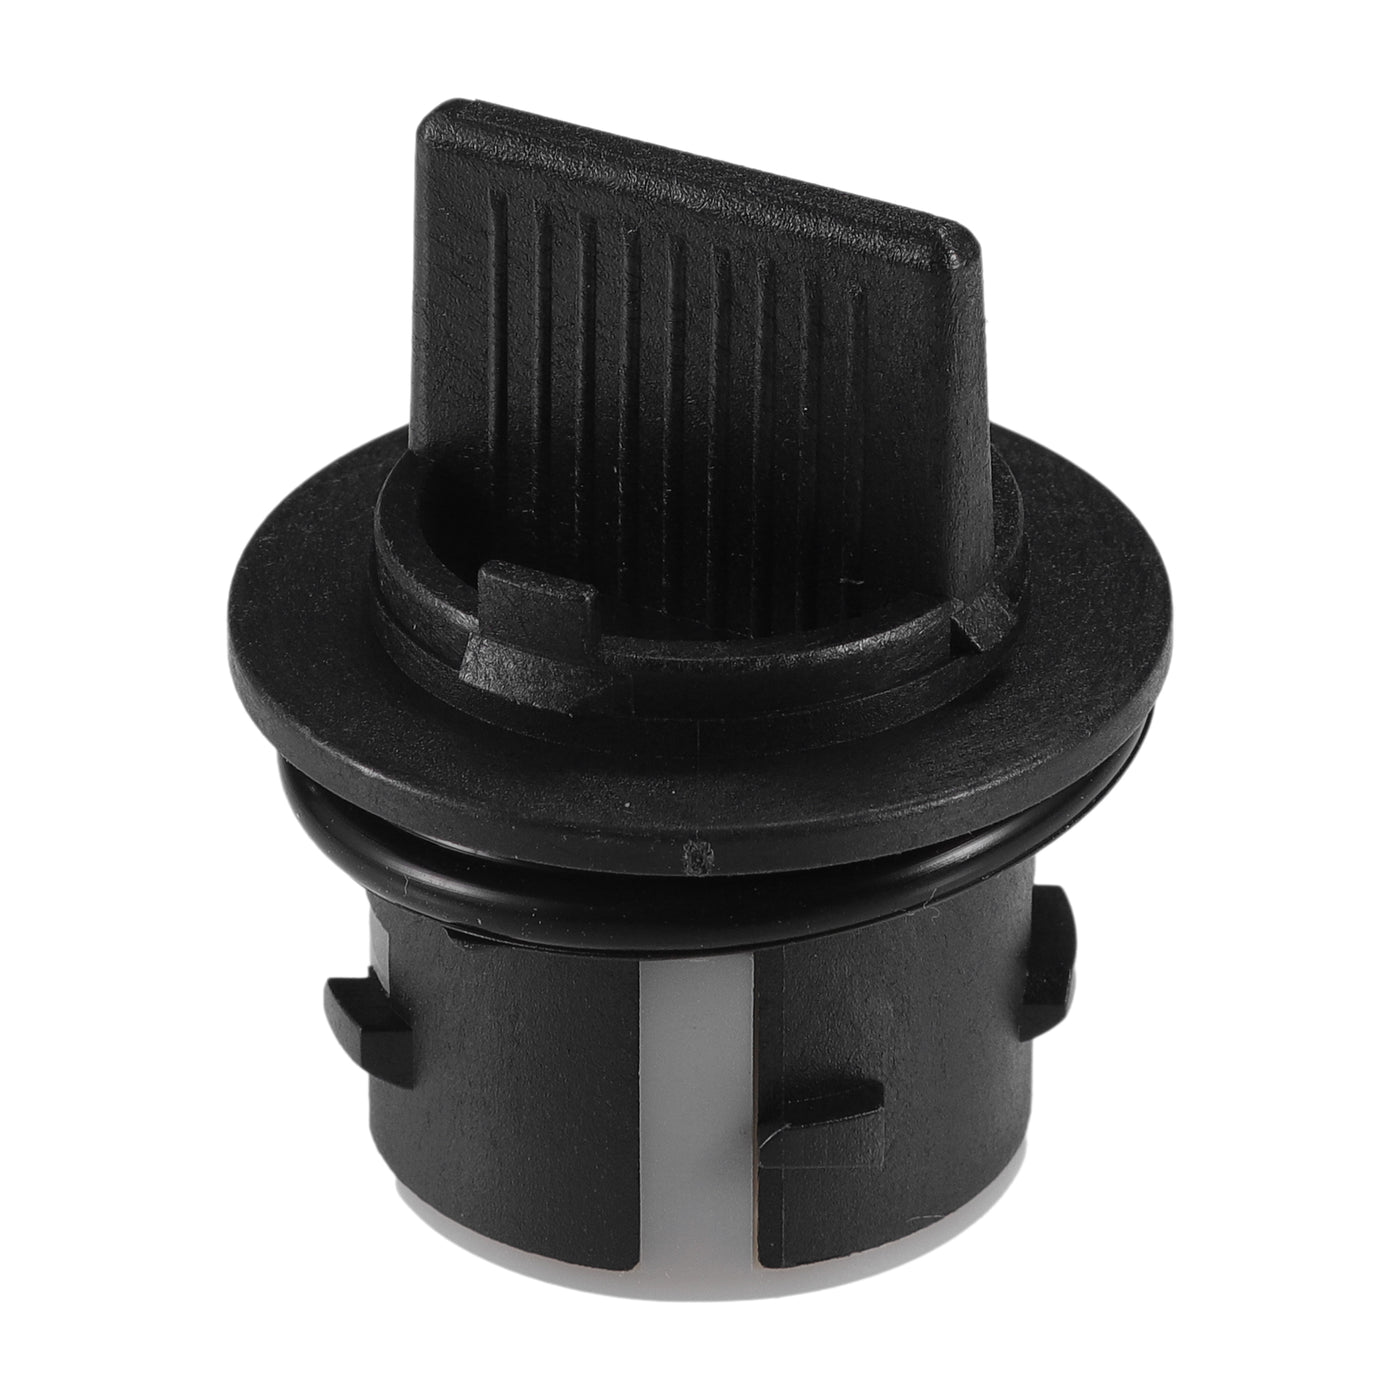 Motoforti Turn Signal Light Bulb Socket, for Hyundai Santa Fe 2010-2013, ABS, No.921613R010, Black